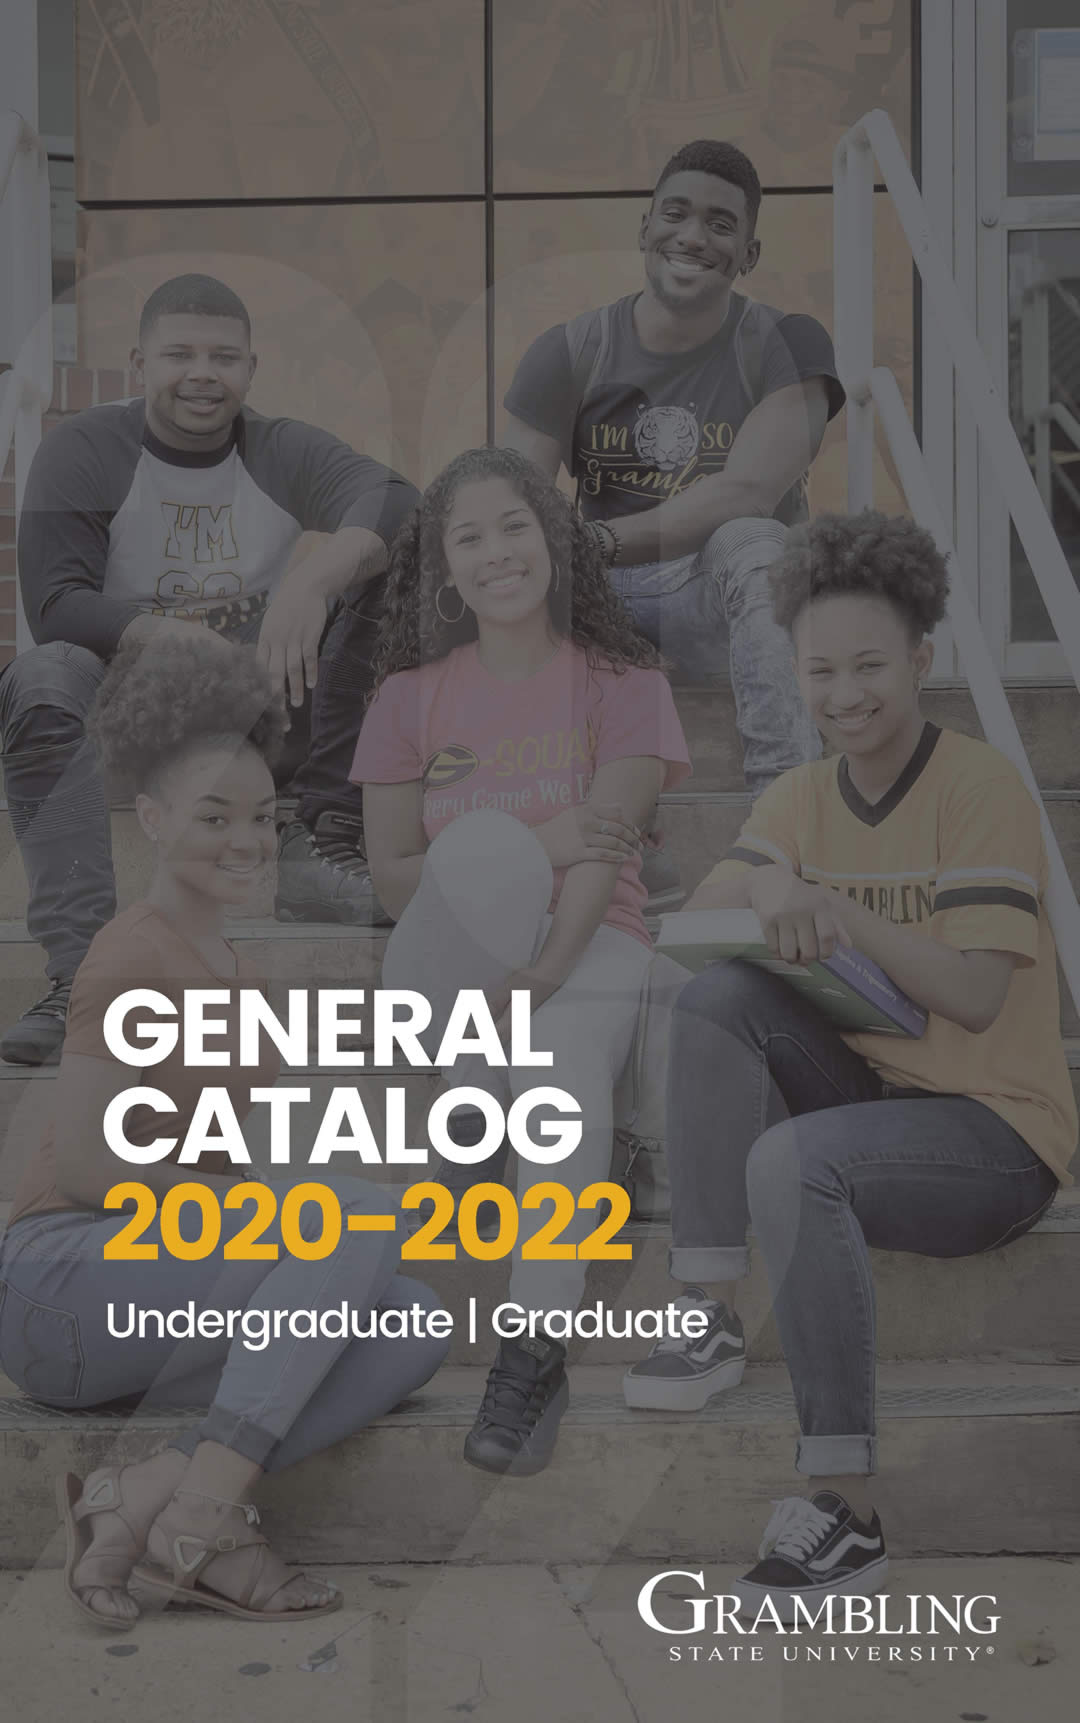 Grambling State Uunversity 2020-2022 Undergraduate/Graduate General Catalog Cover